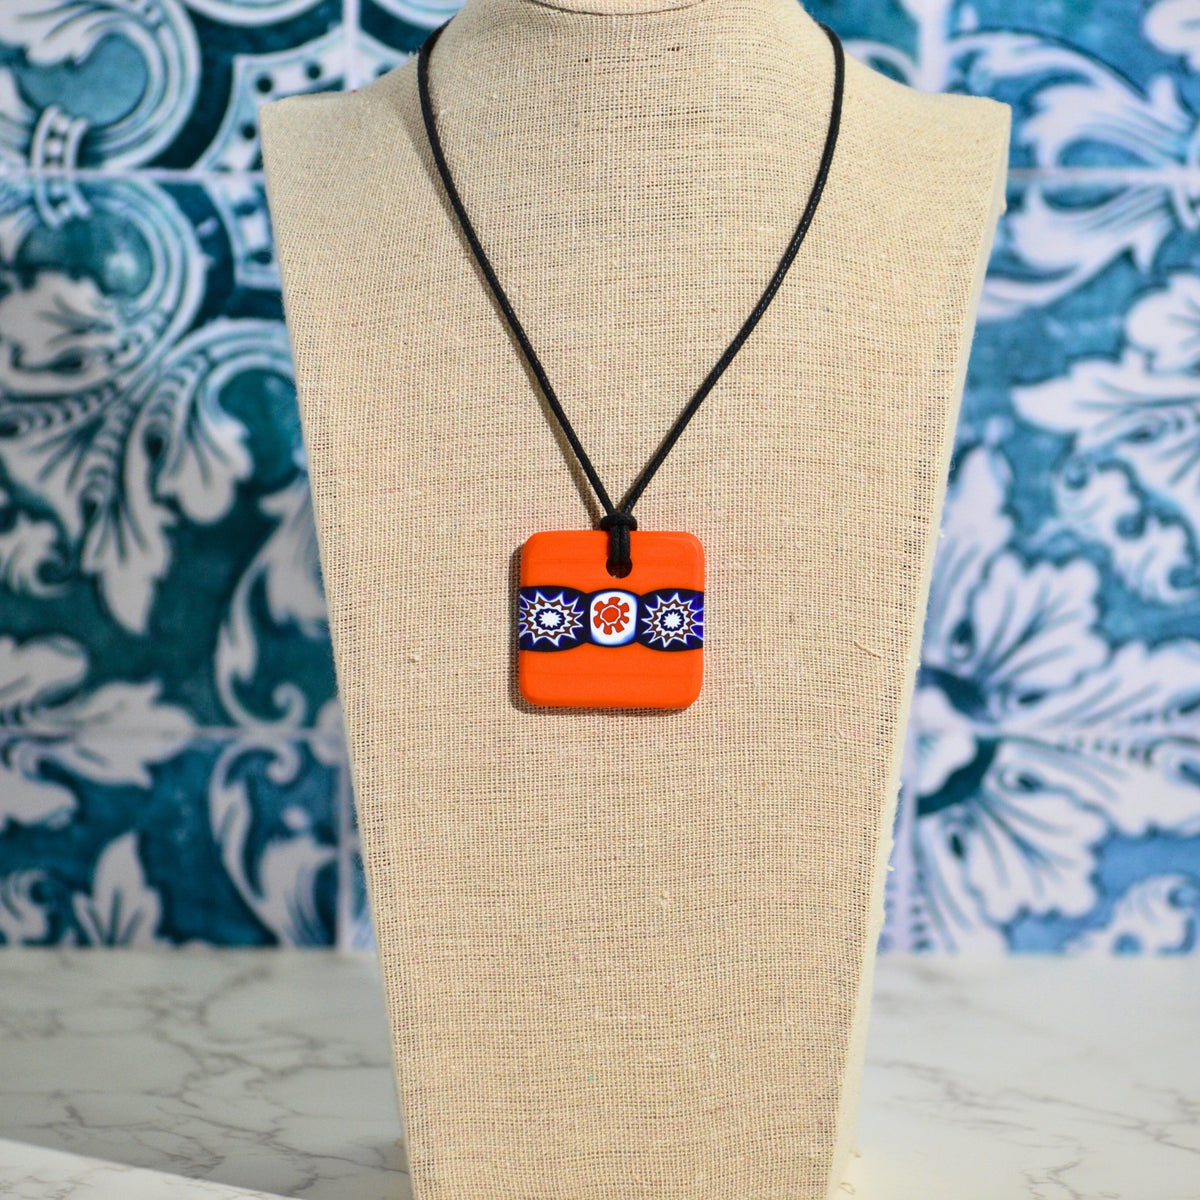 Piastra Millefiori Orange Glass Pendant Necklace, Made in Italy - My Italian Decor